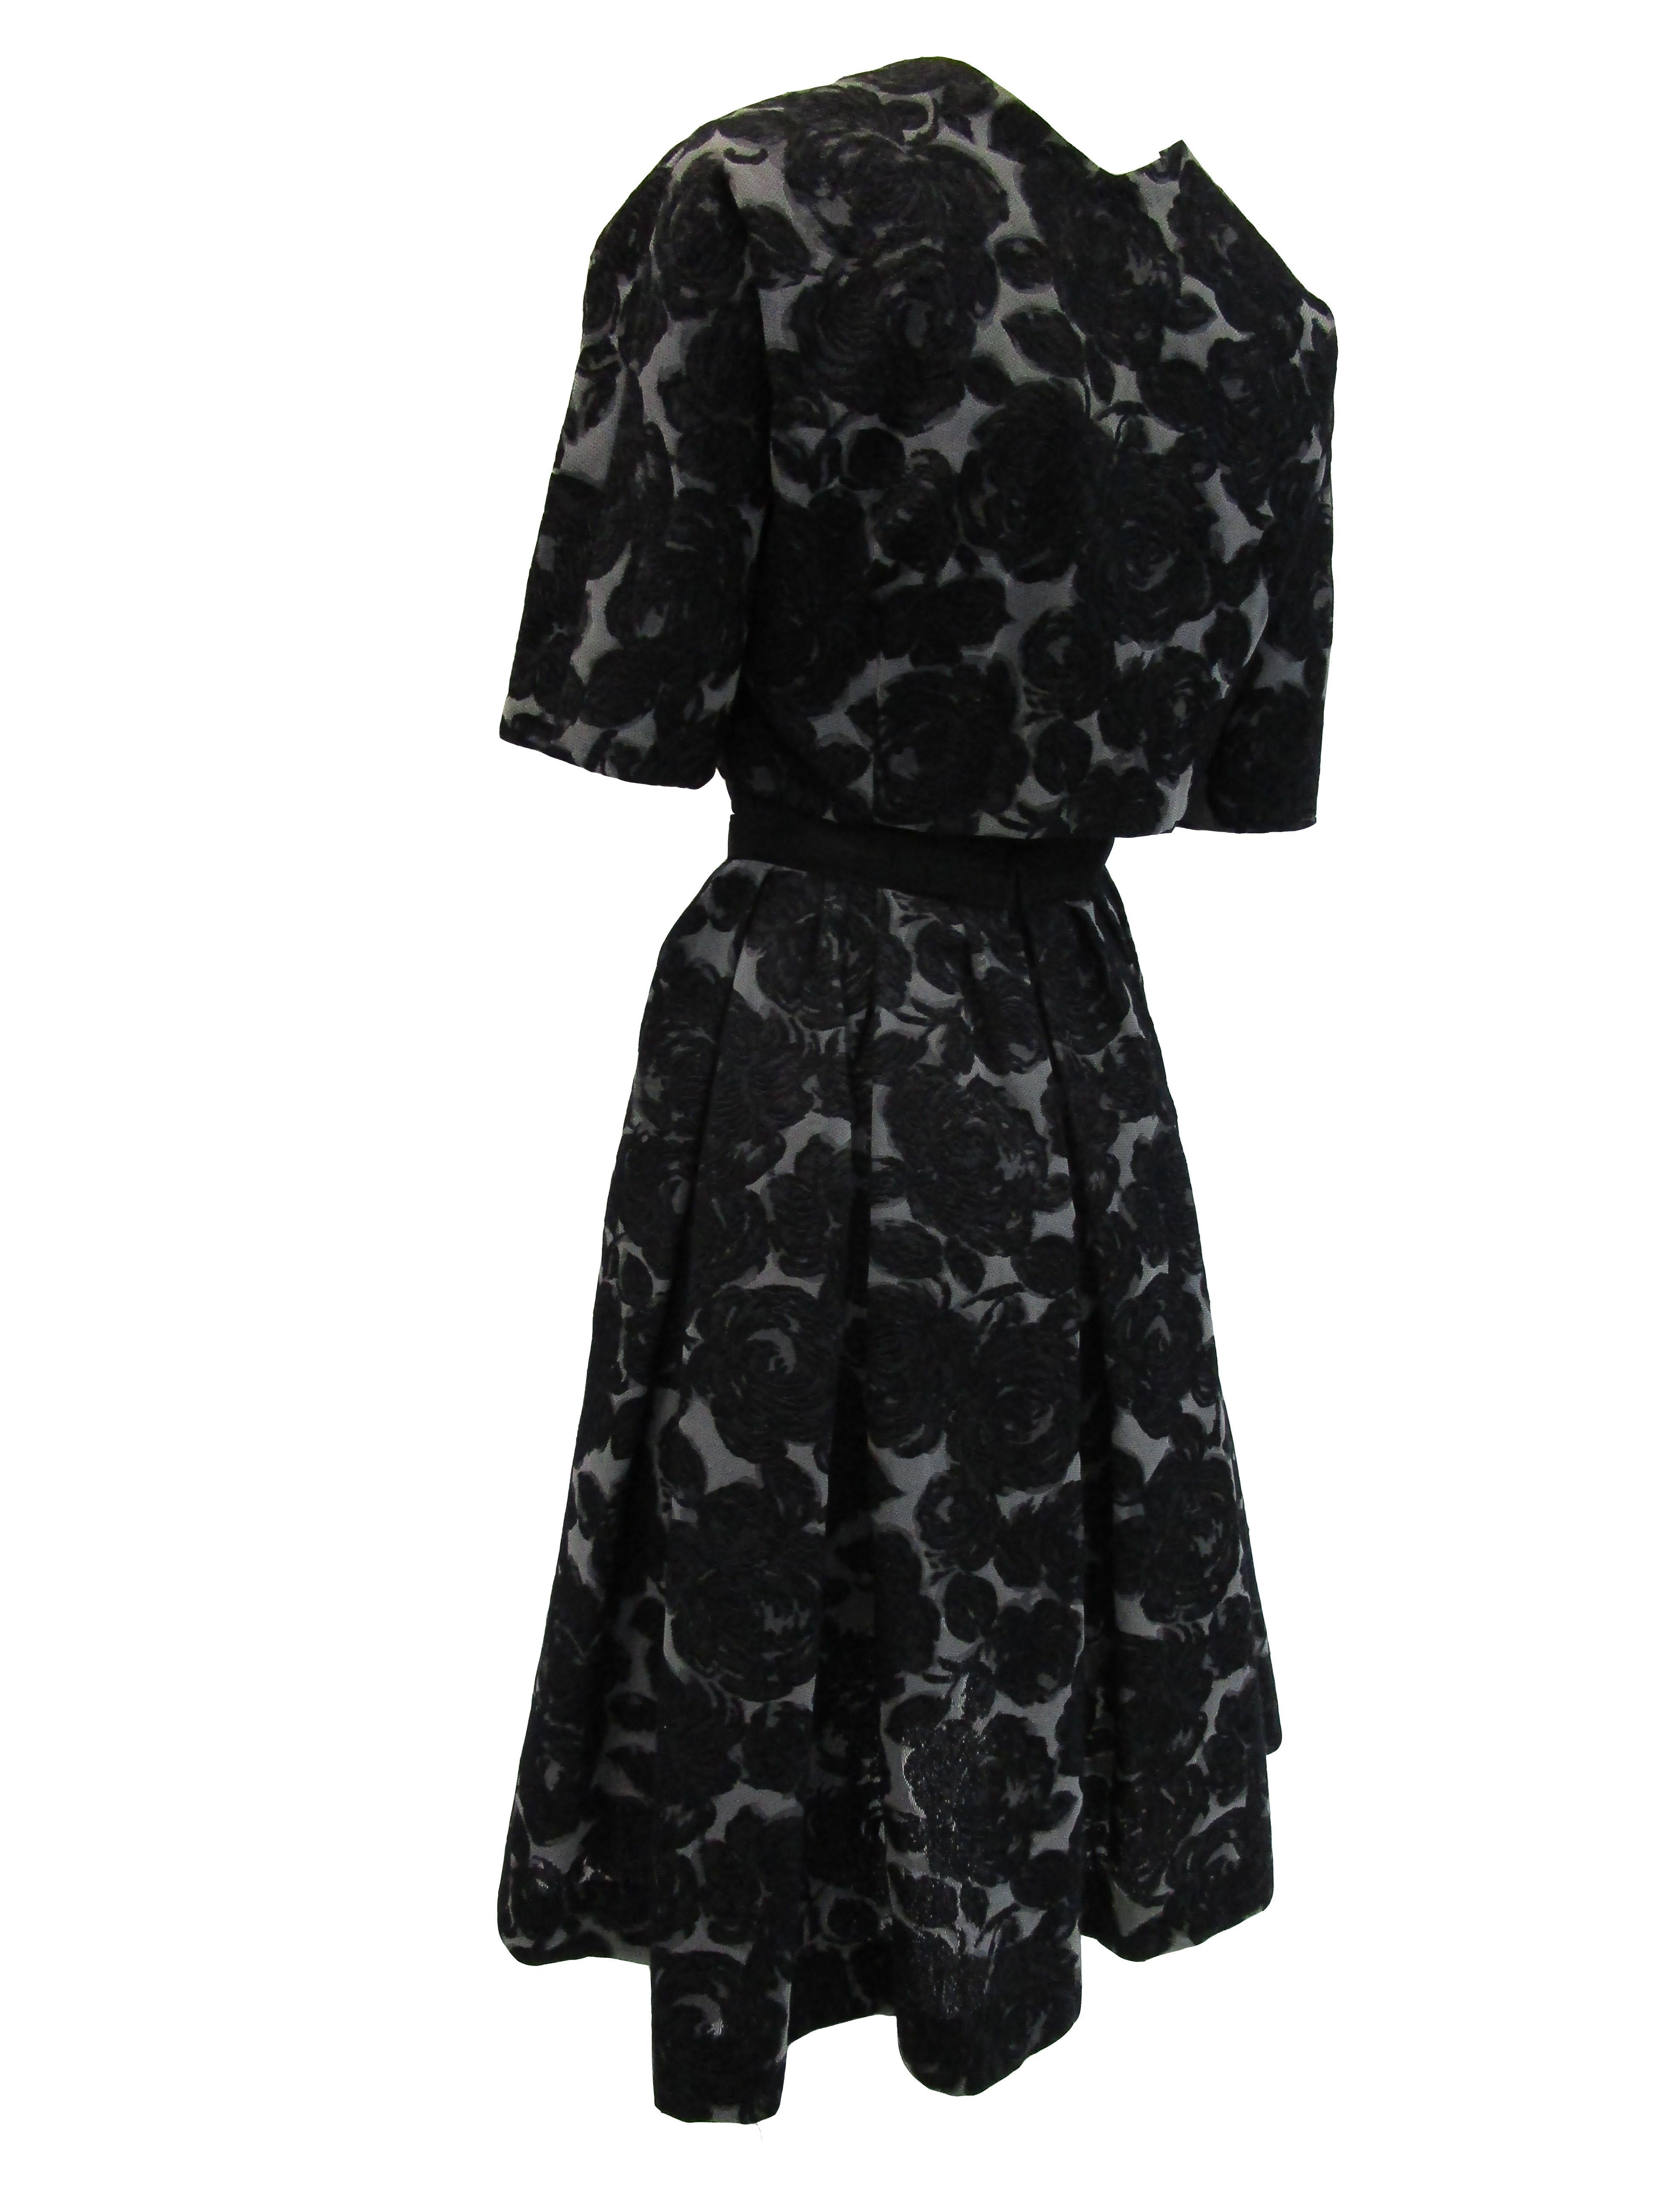 Rare 1950s Madame Gres licensed Black & Grey Embroidered Dress w/ Bolero Jacket For Sale 6